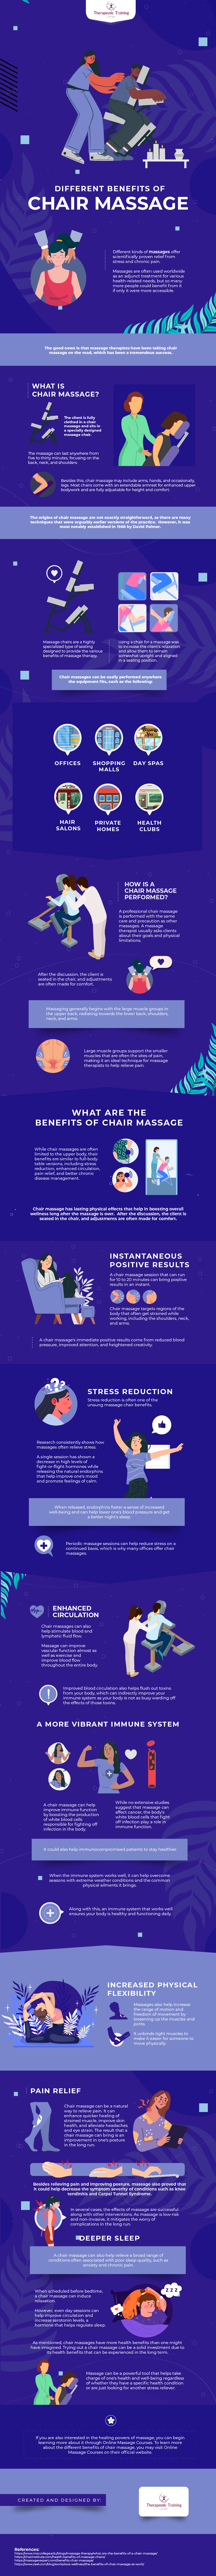 chair_massage_infographic